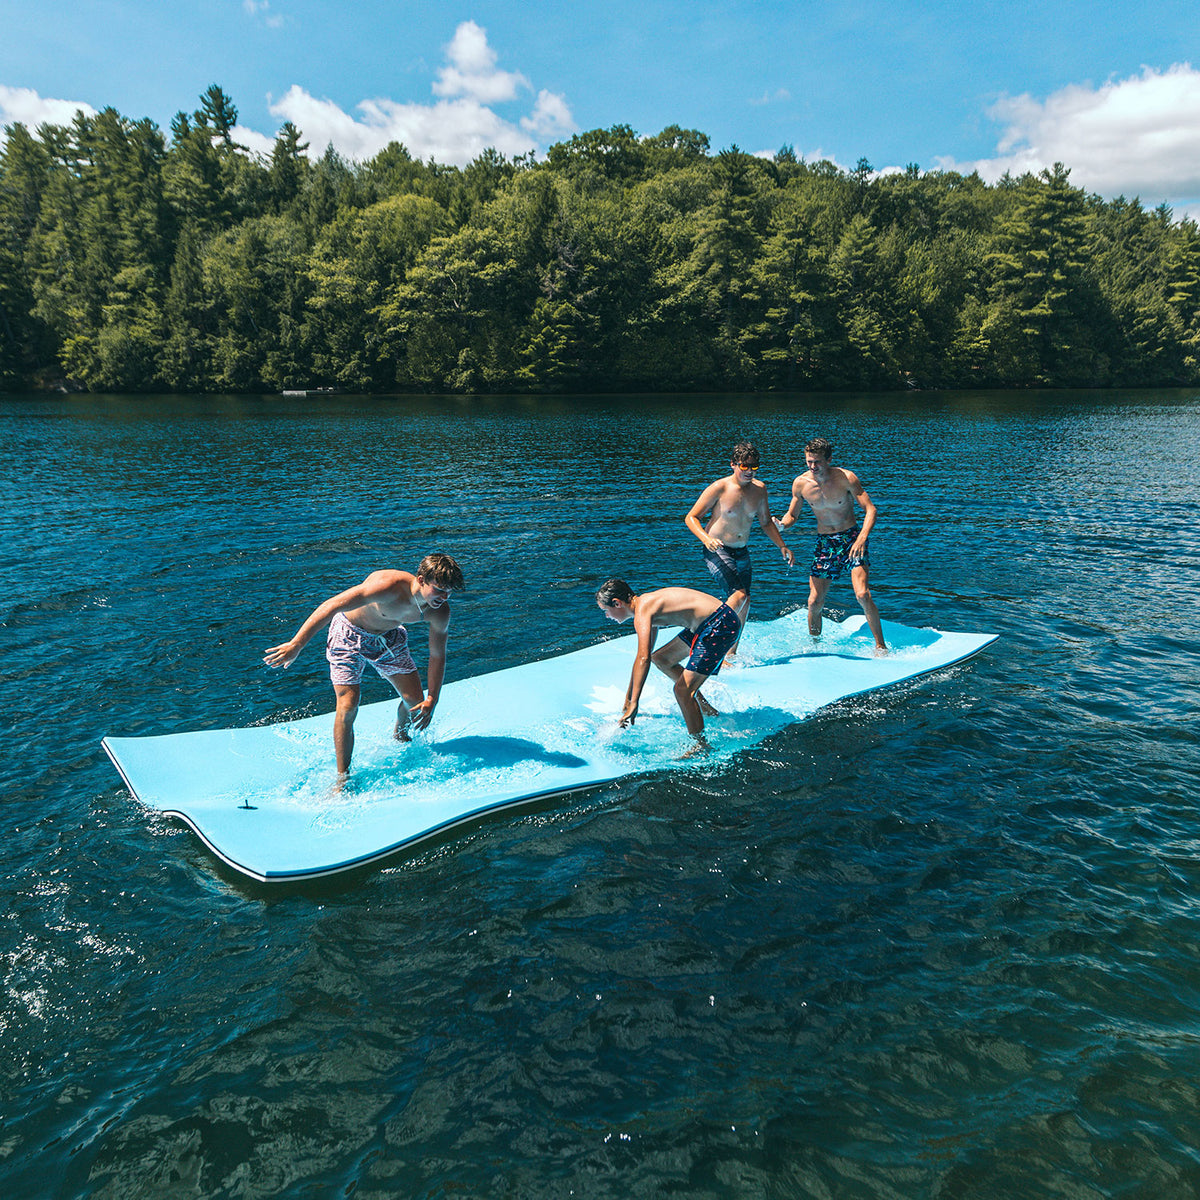 Float-Eh, the Premium Water Mat, Swimming Pool Floats